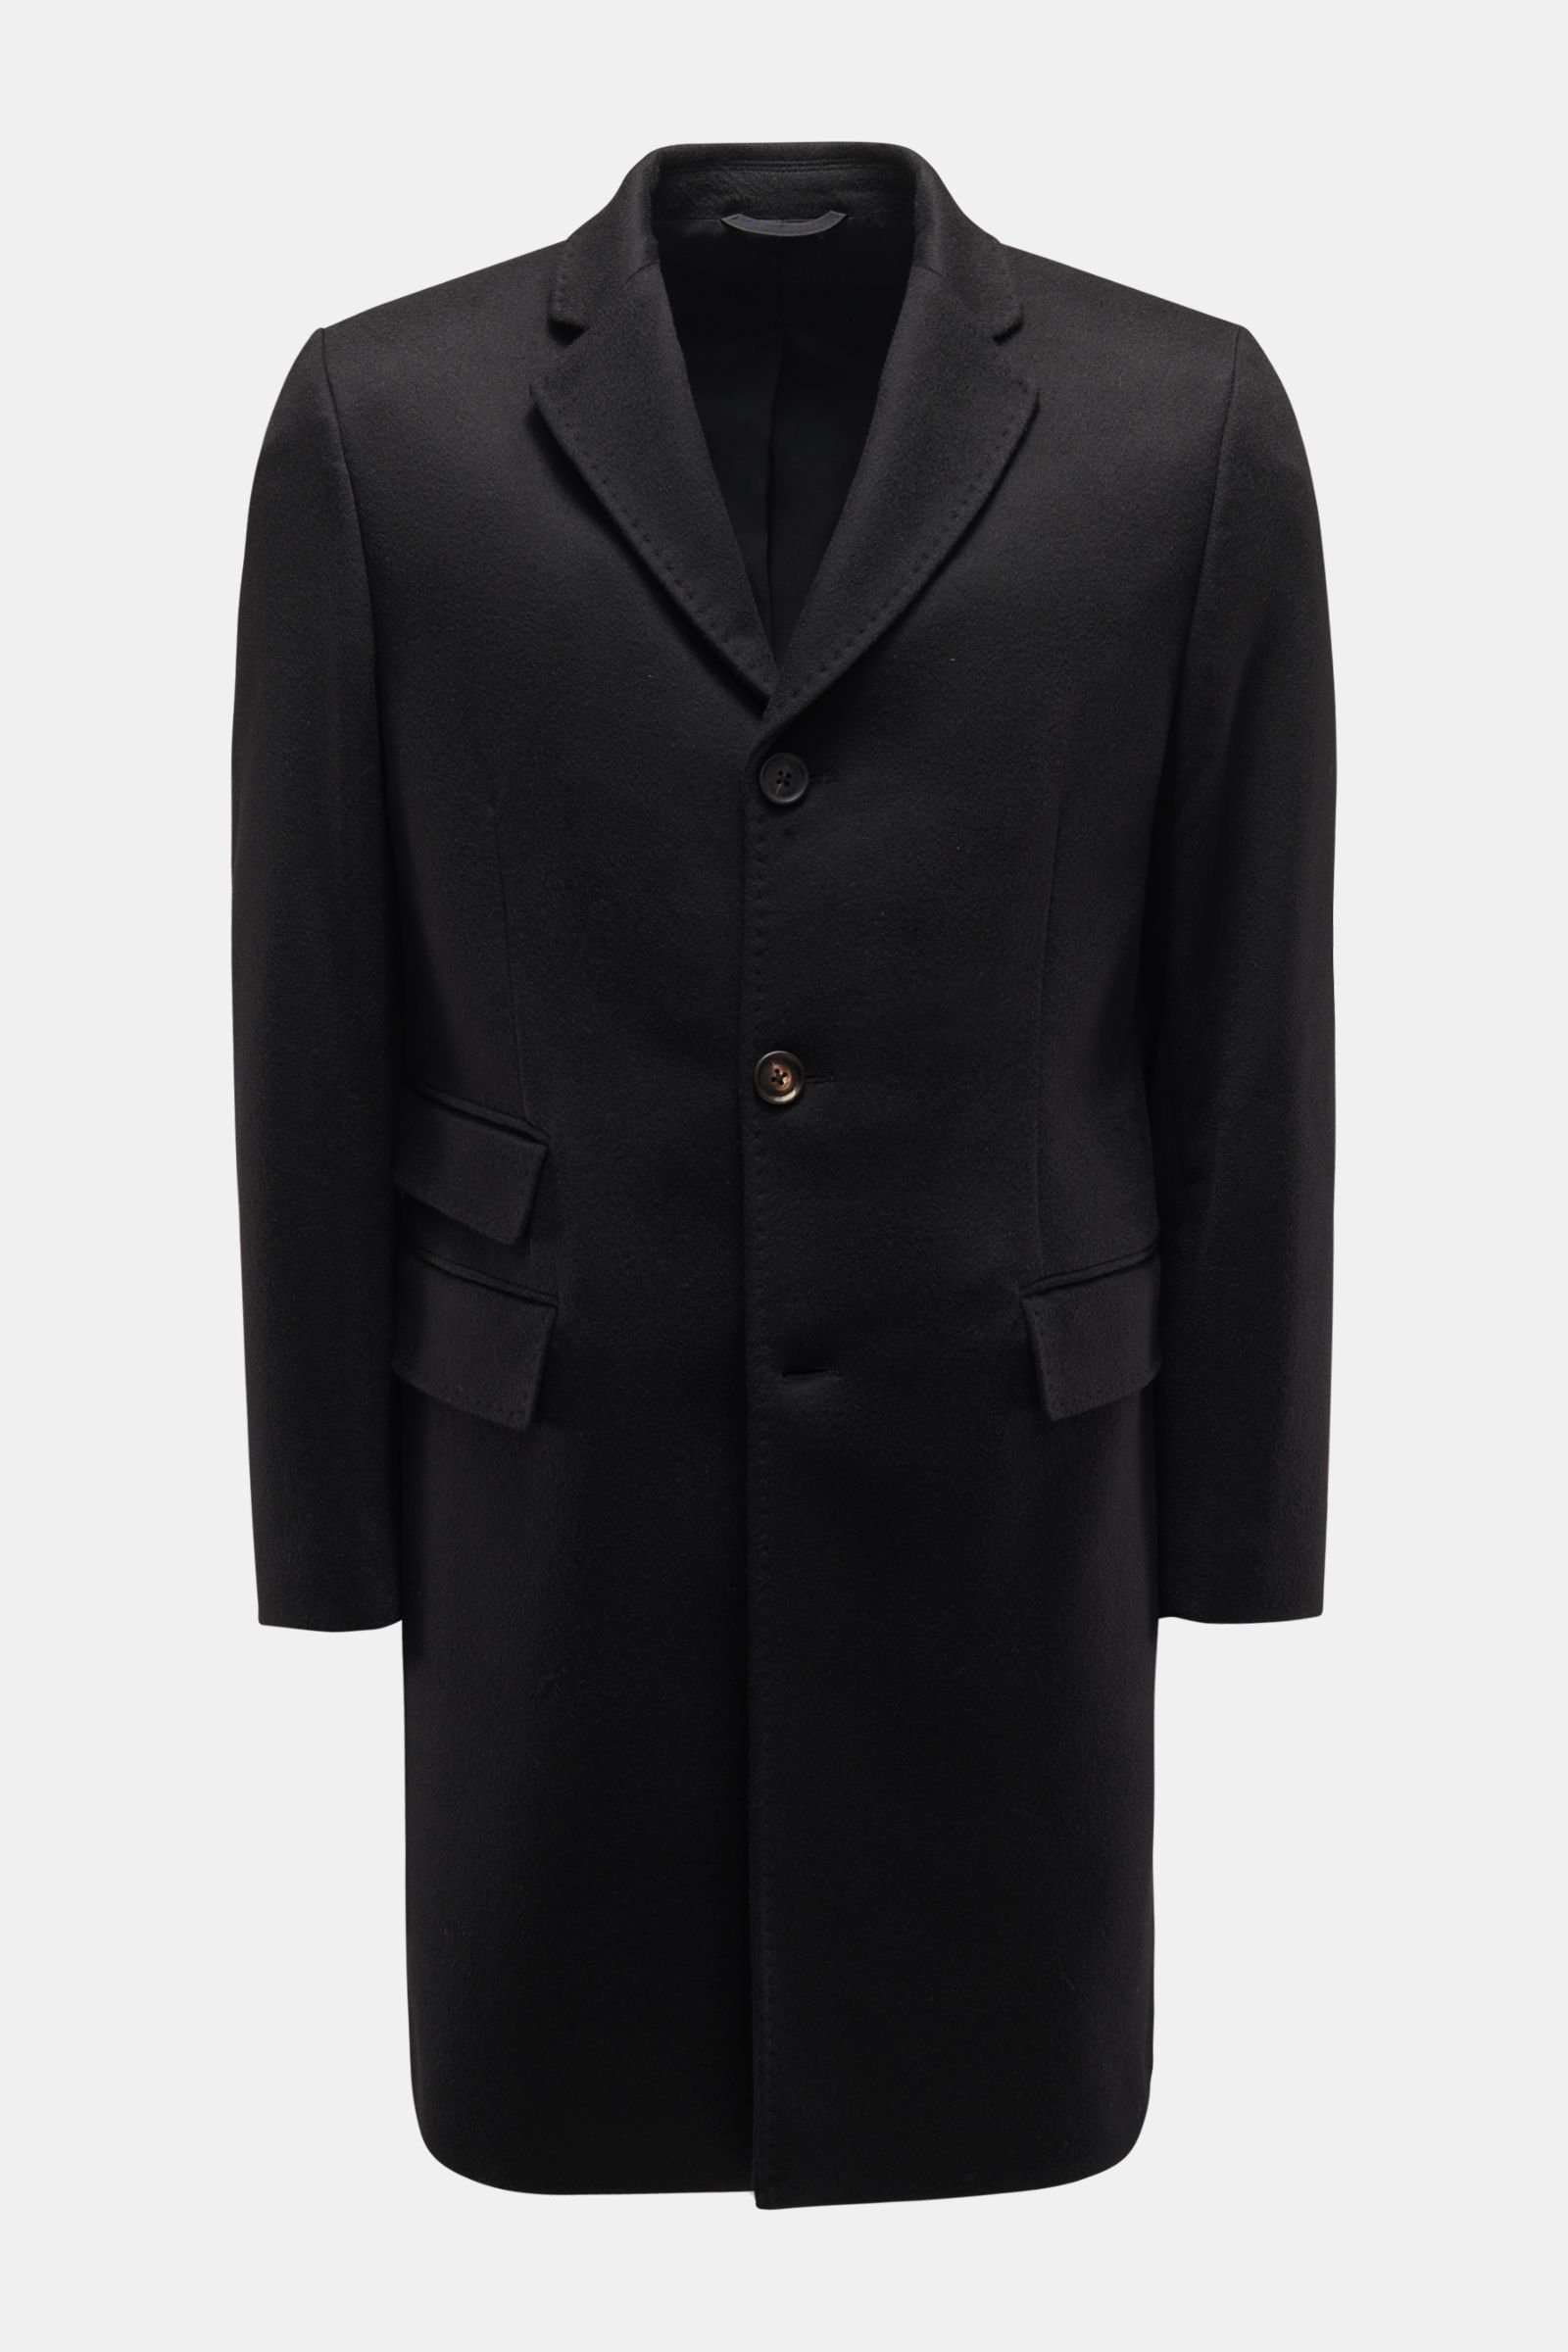 COLOMBO cashmere coat black | BRAUN Hamburg